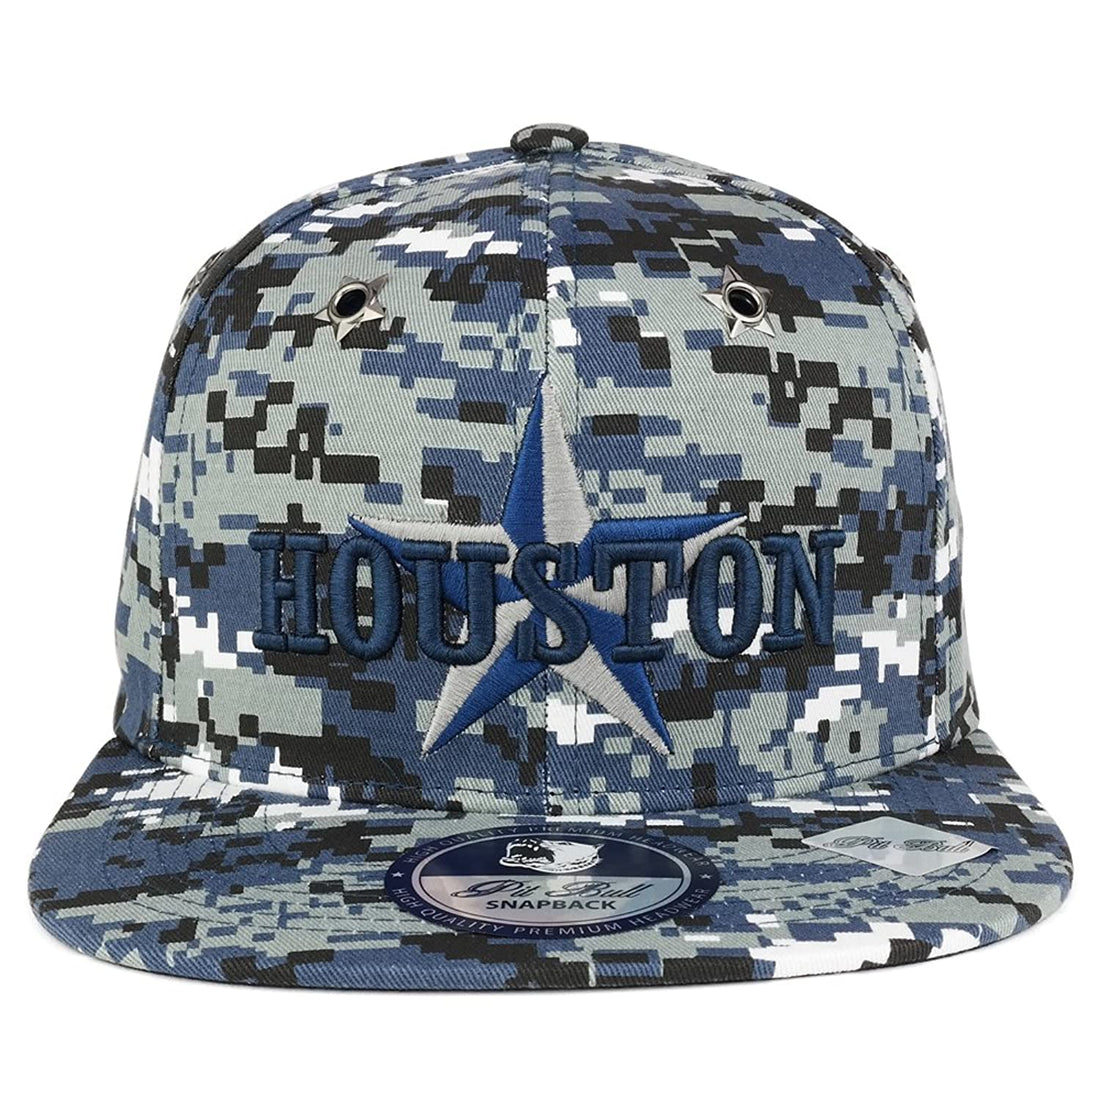 Trendy Apparel Shop Houston Star 3D Embroidered Military Digital Camo Printed Flat Bill Snapback Cap